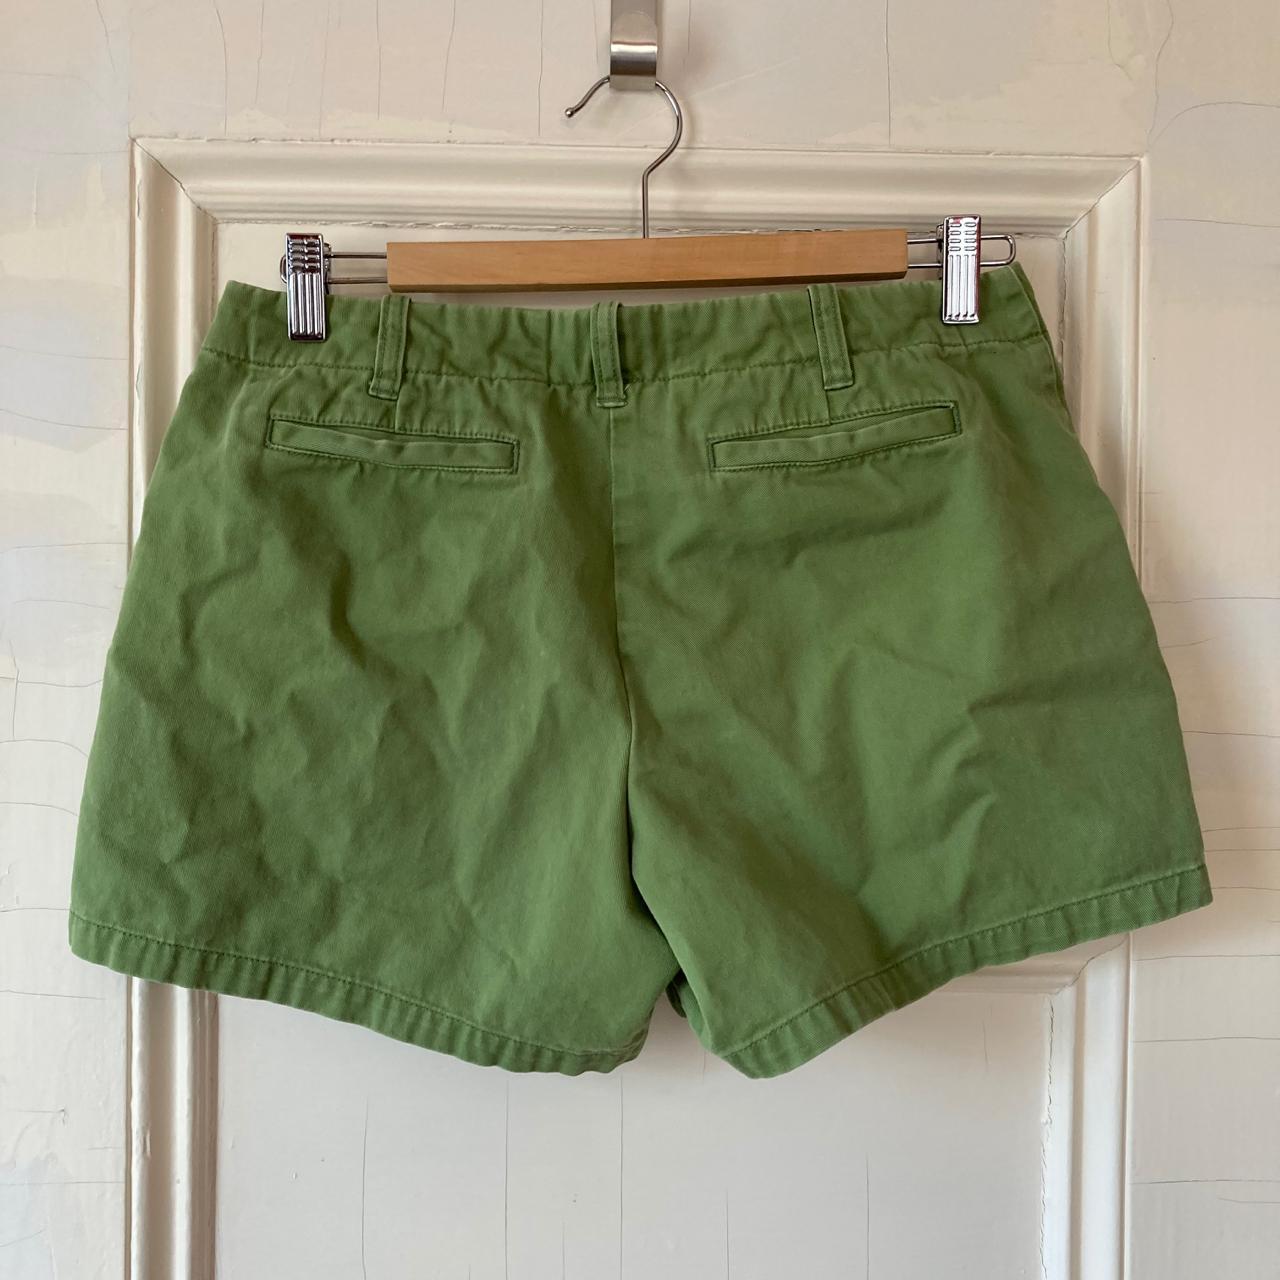 J.Crew Women's Green and Khaki Shorts (2)